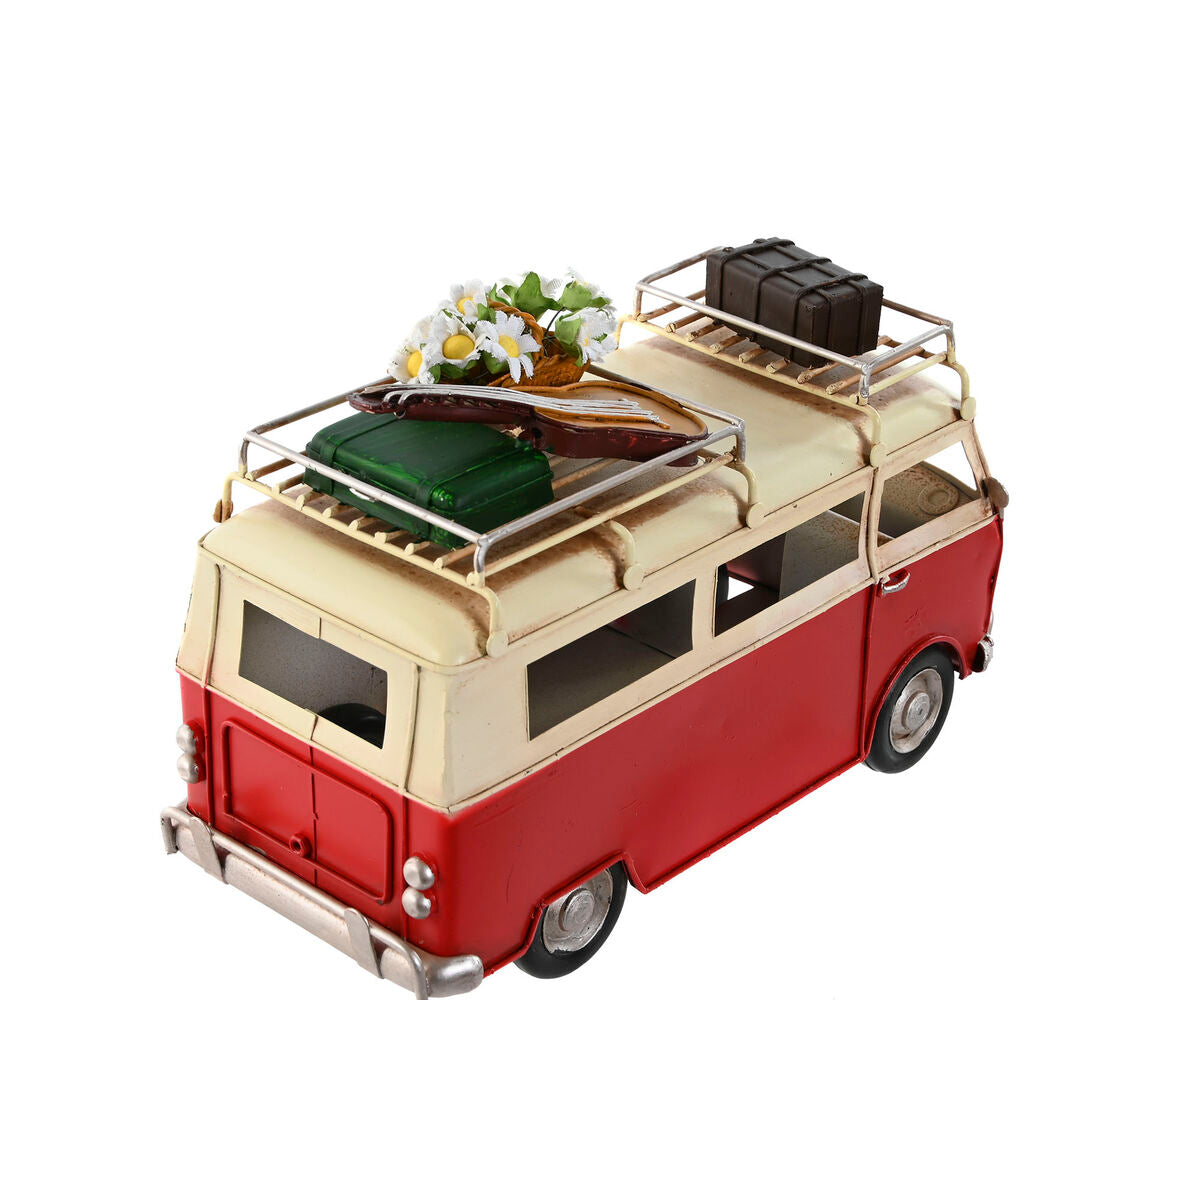 Prydnadsfigur Home ESPRIT Skåpbil Röd Grön Vintage 25 x 12 x 17 cm (2 antal)